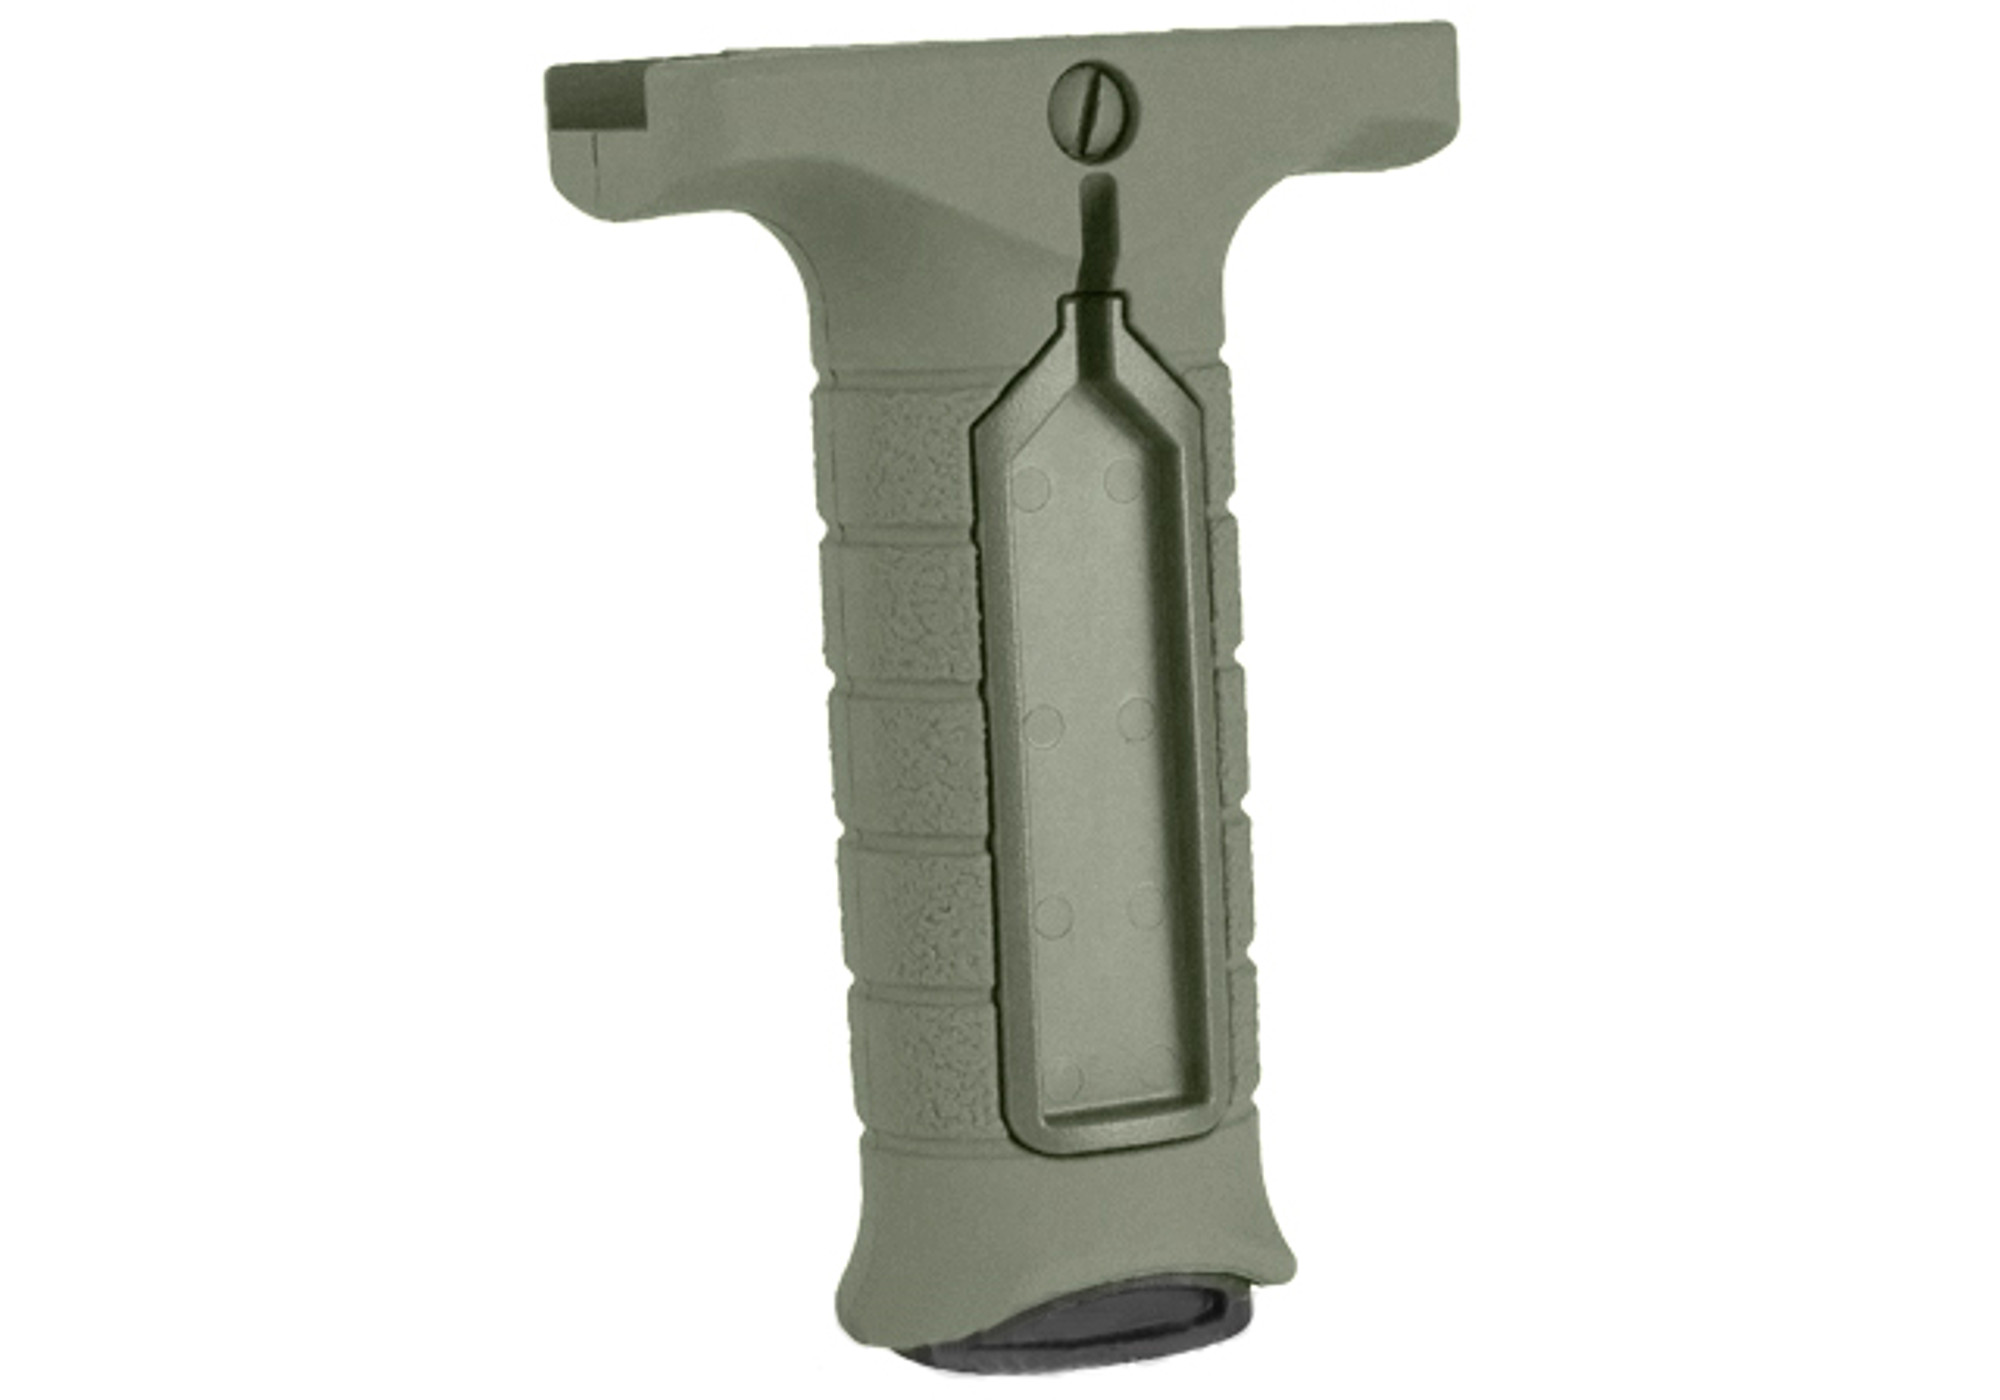 Stark Equipment SE3 Forward Vertical Grip with Pressure Switch Pocket - Green